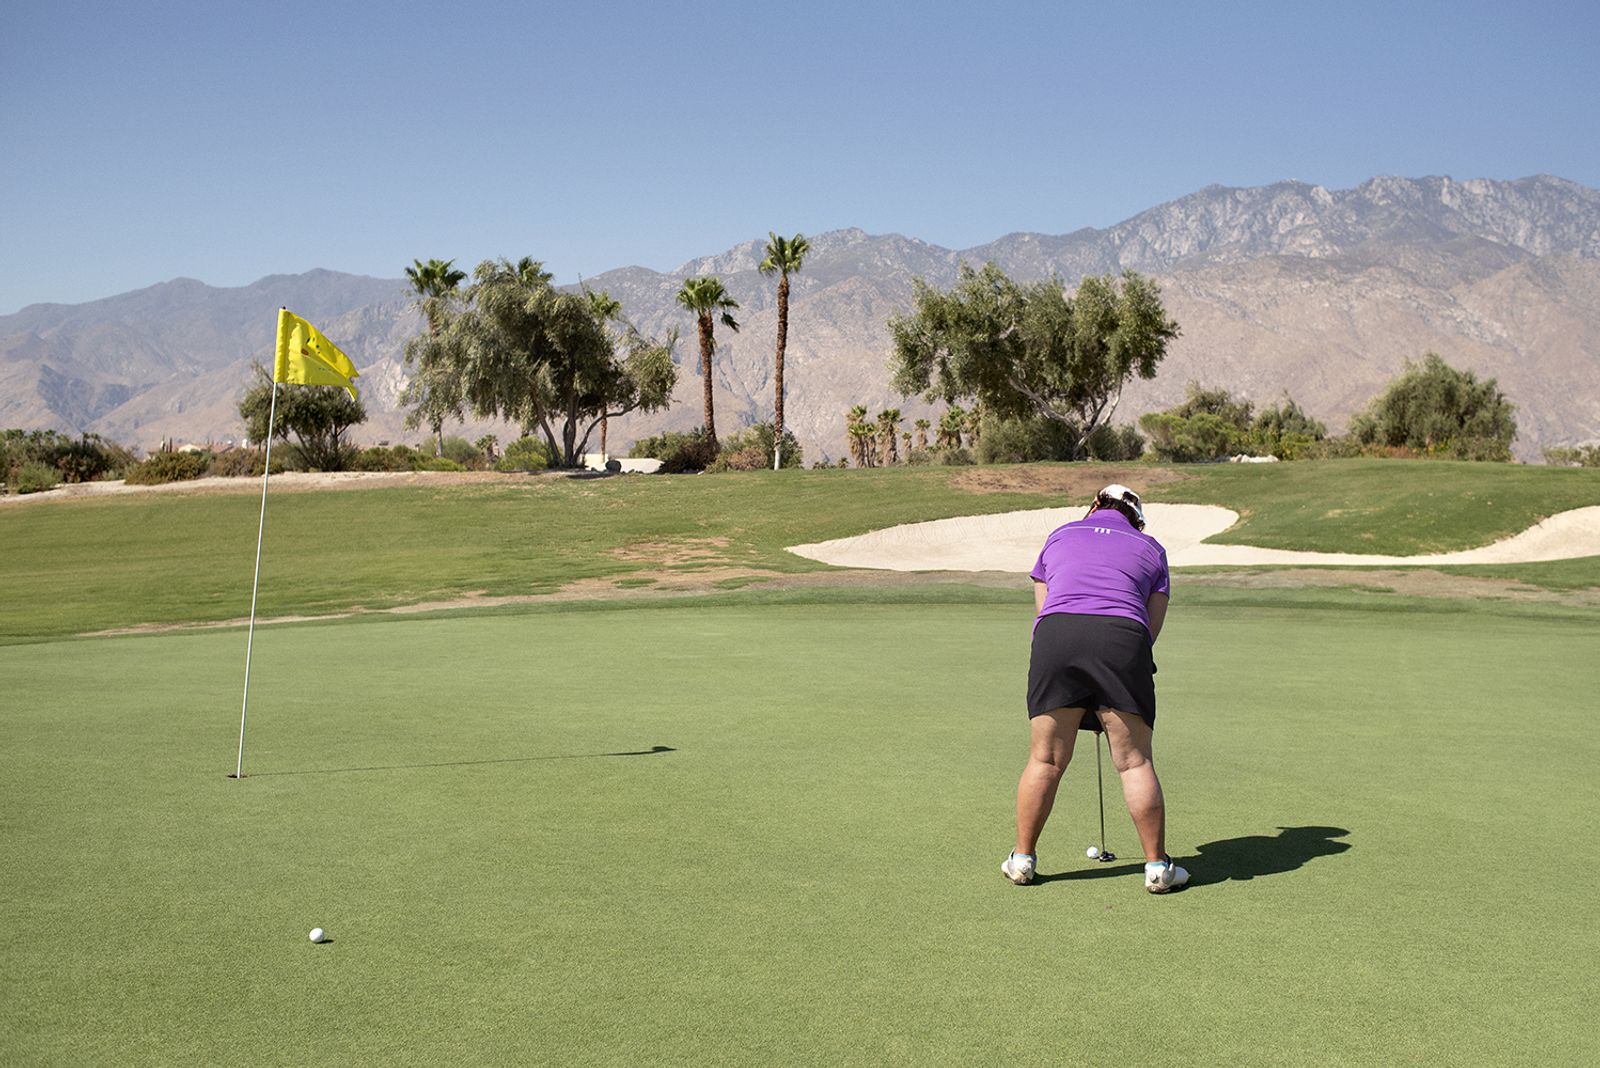 © Daria Addabbo - Golf Resort. Palm Springs, California. August 2019